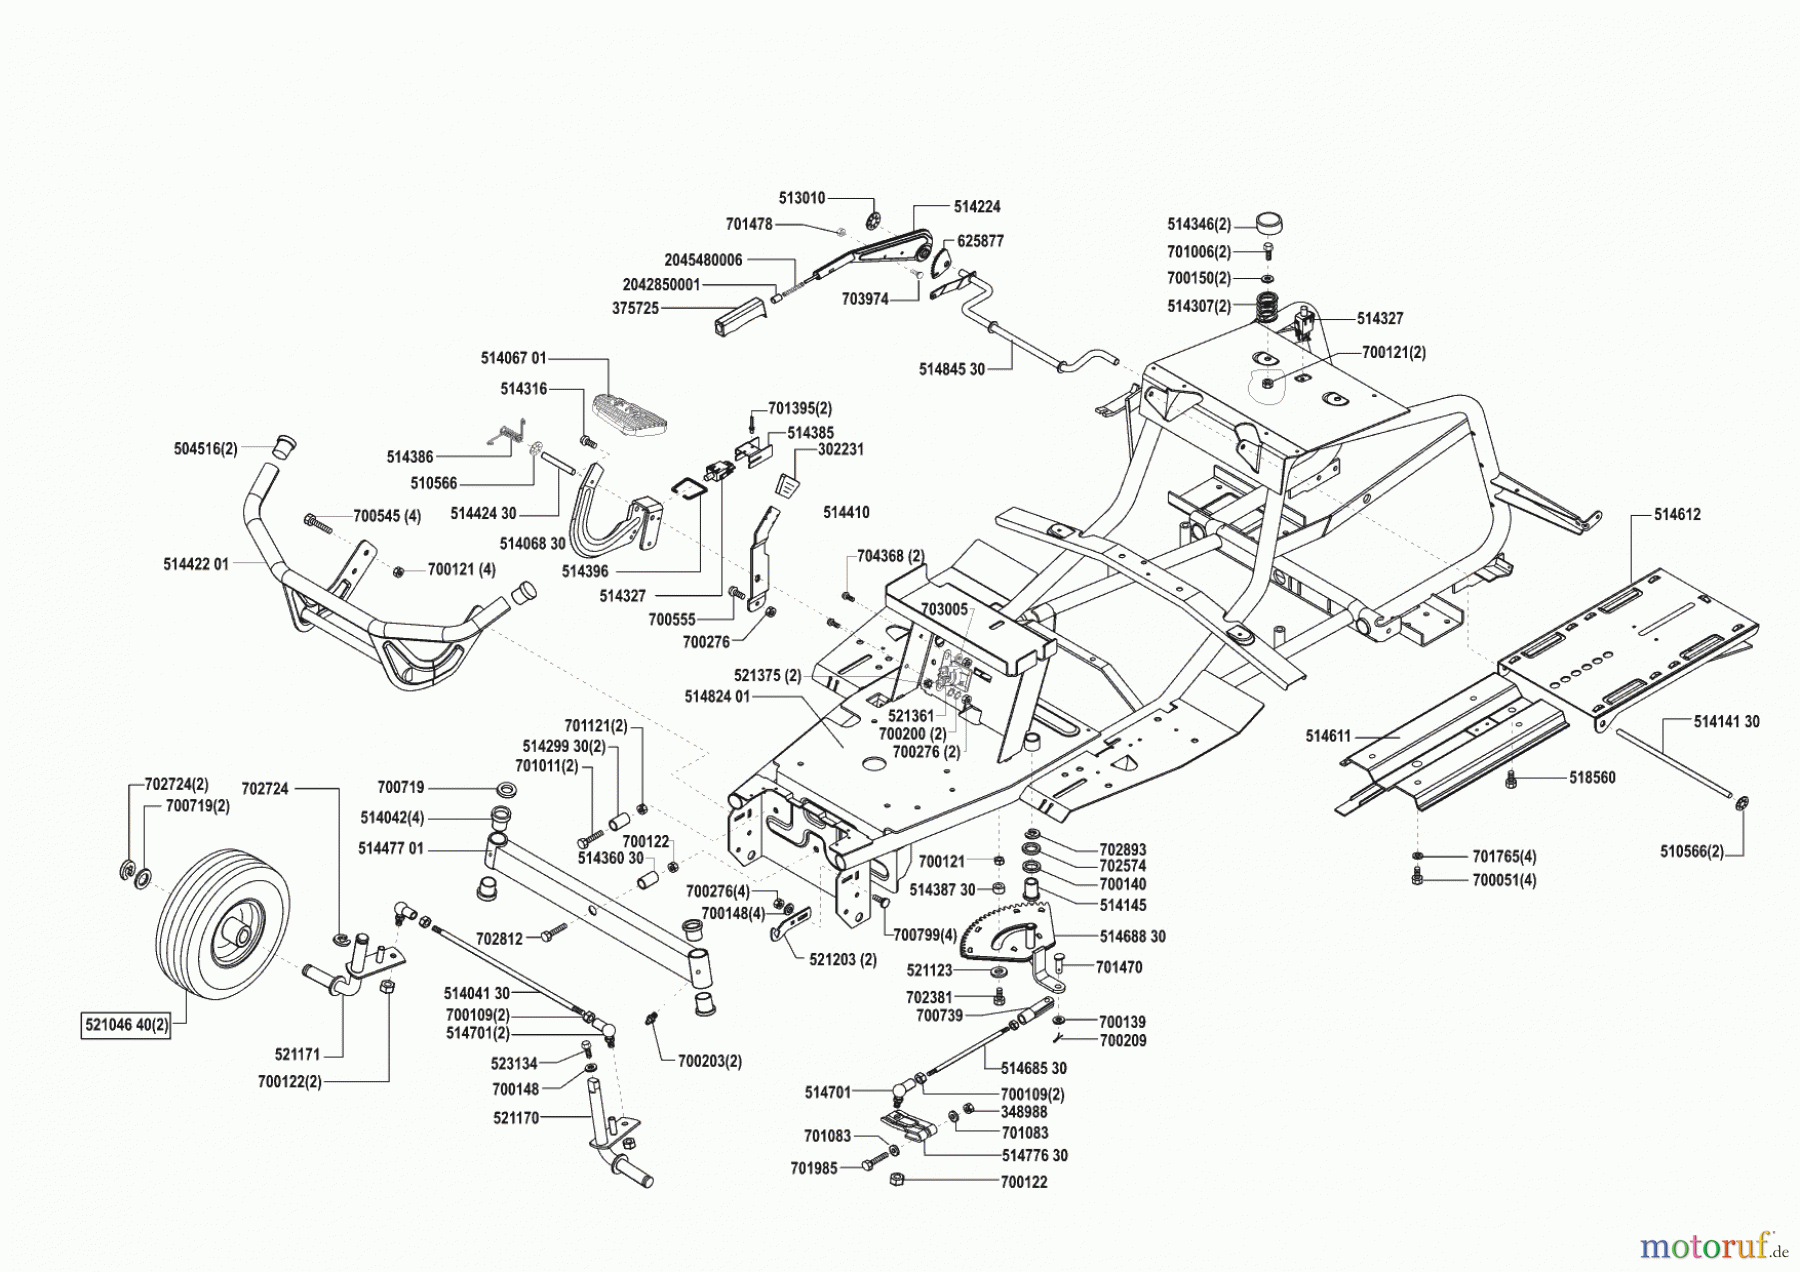  AL-KO Gartentechnik Rasentraktor T 17-102 HD ab 10/2001 Seite 2